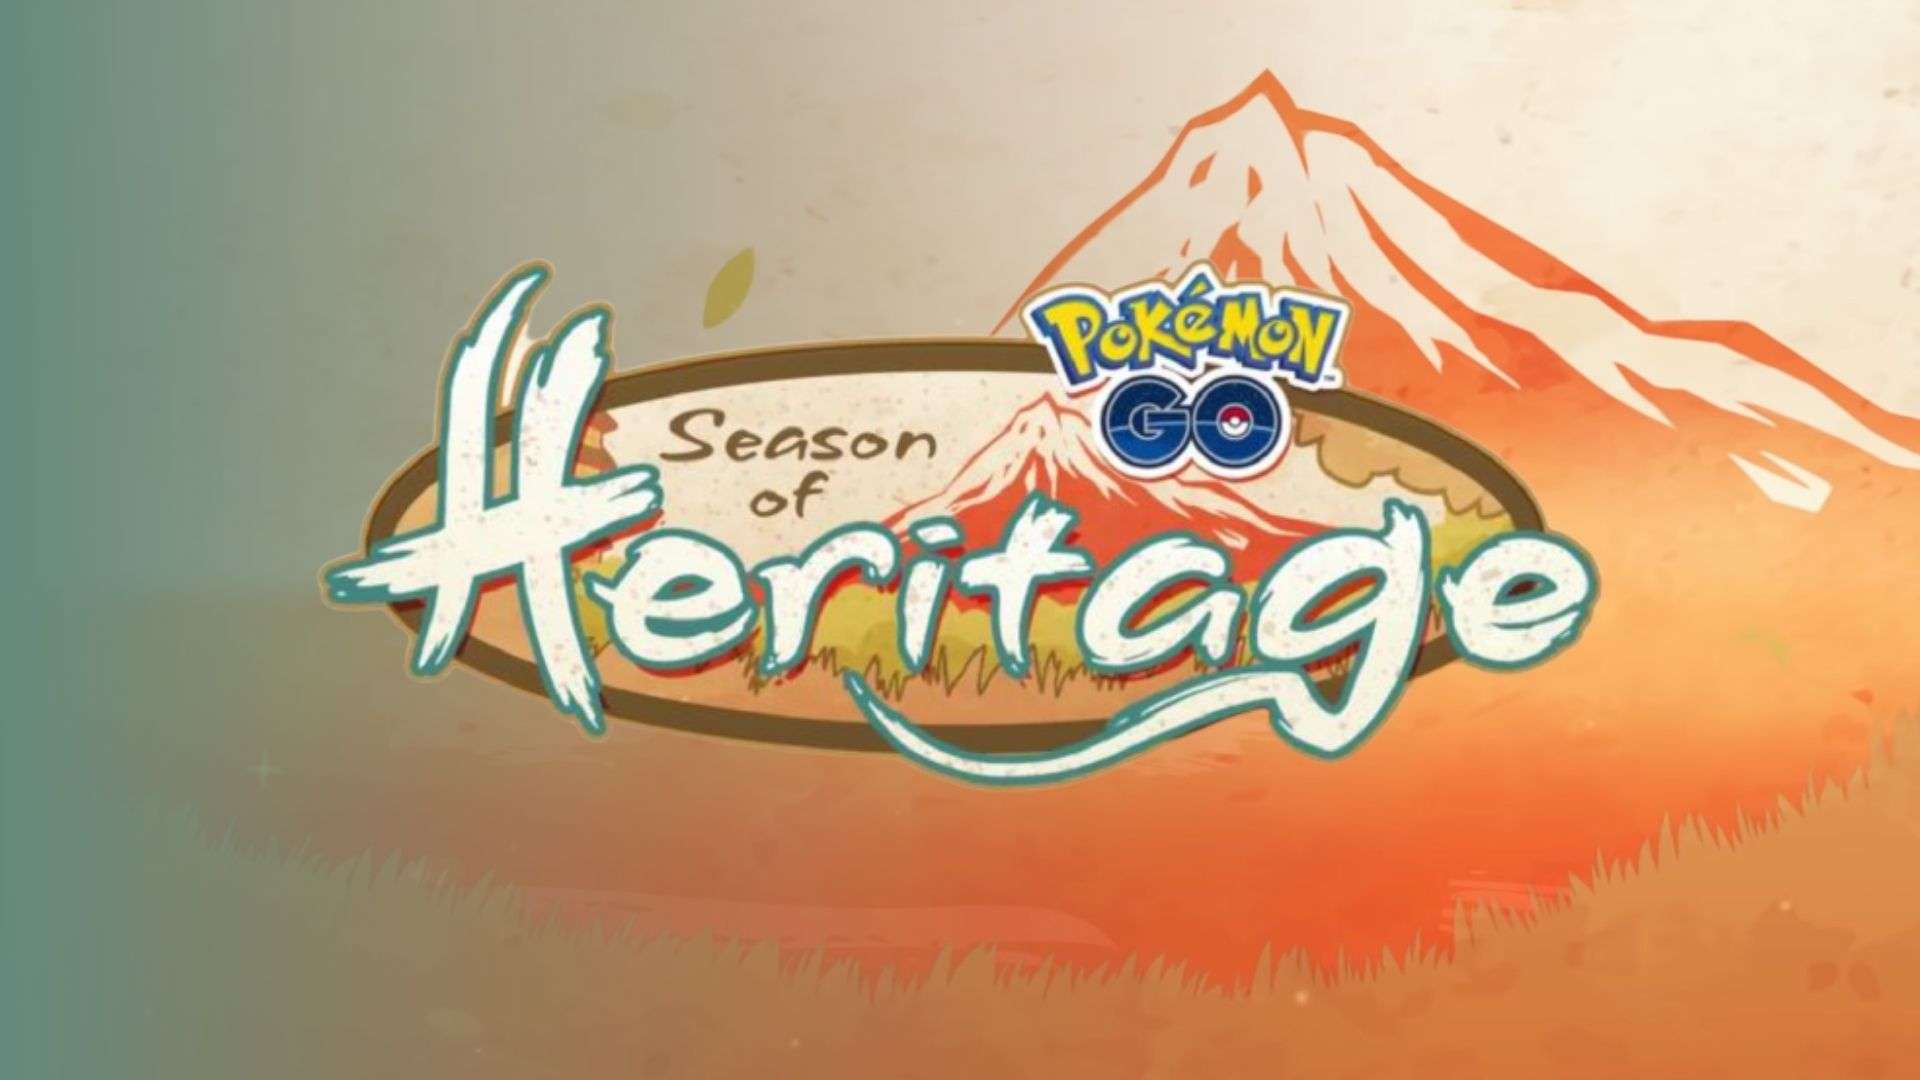 Pokemon go season of heritage promo poster